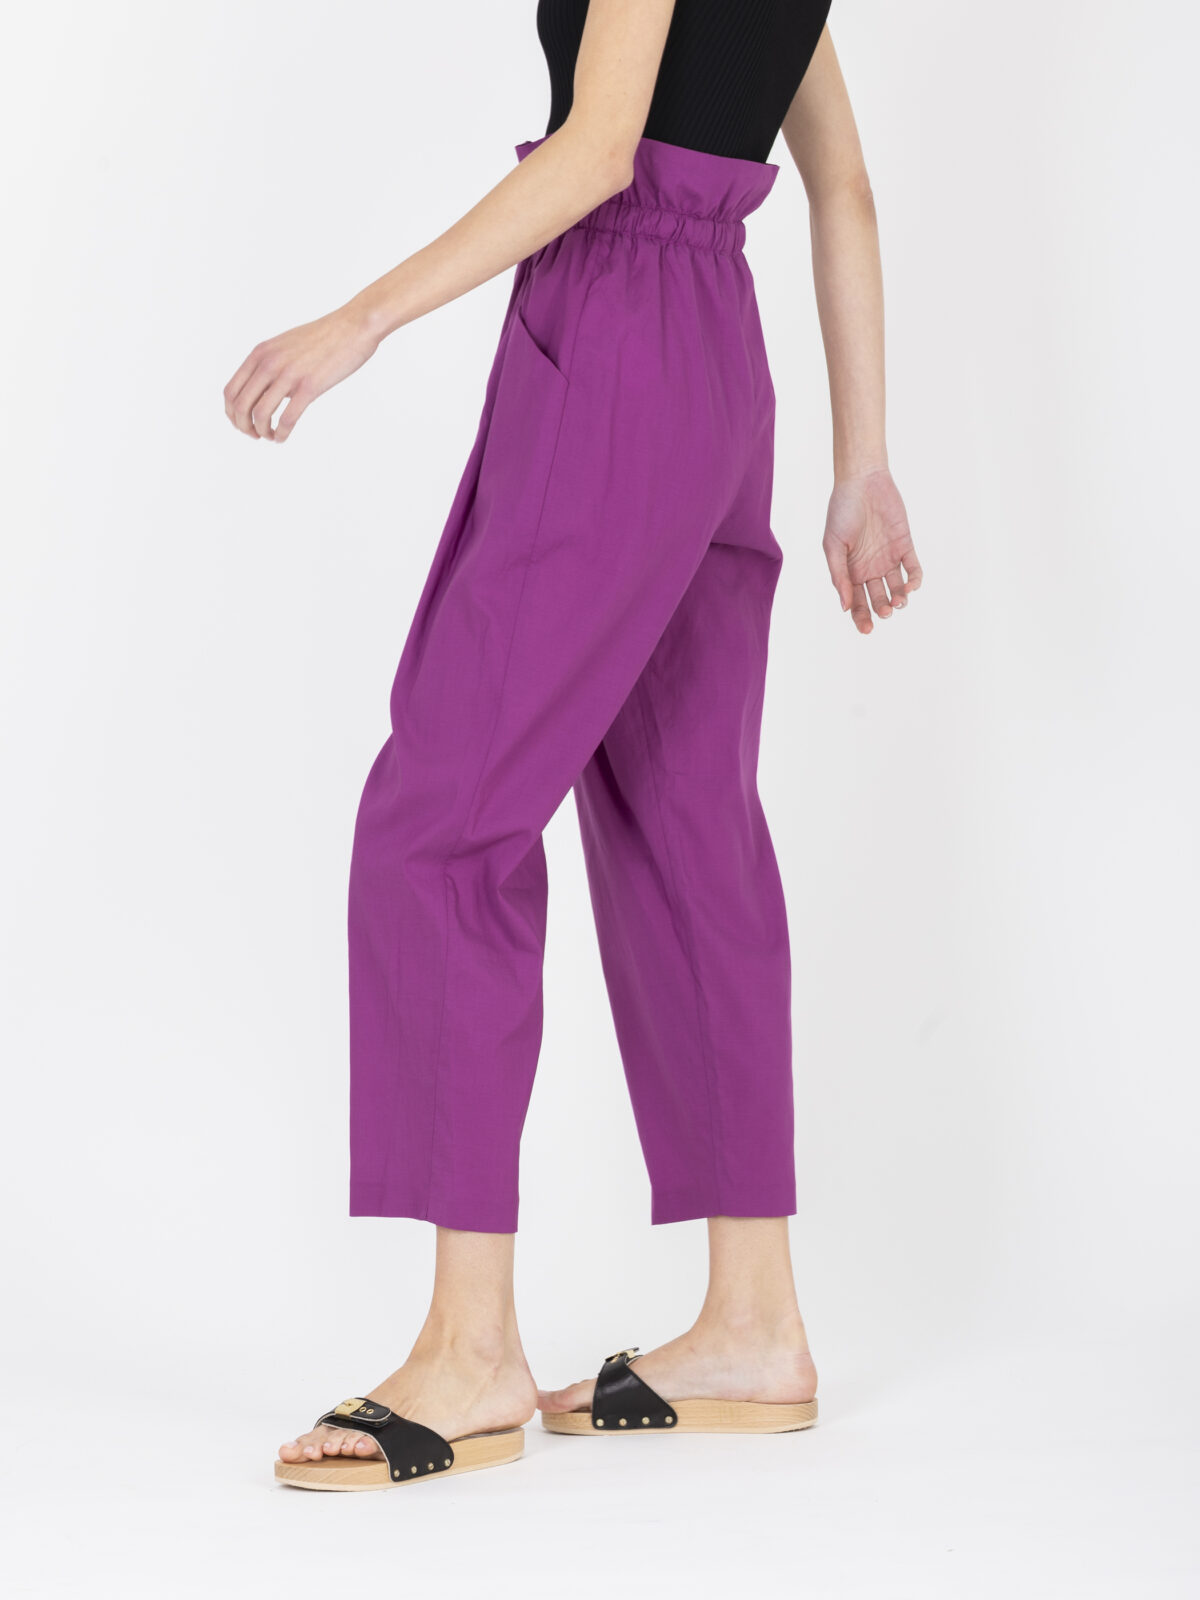 casimir-violet-pants-high-waist-paper-bag-vanessa-bruno-matchboxathens